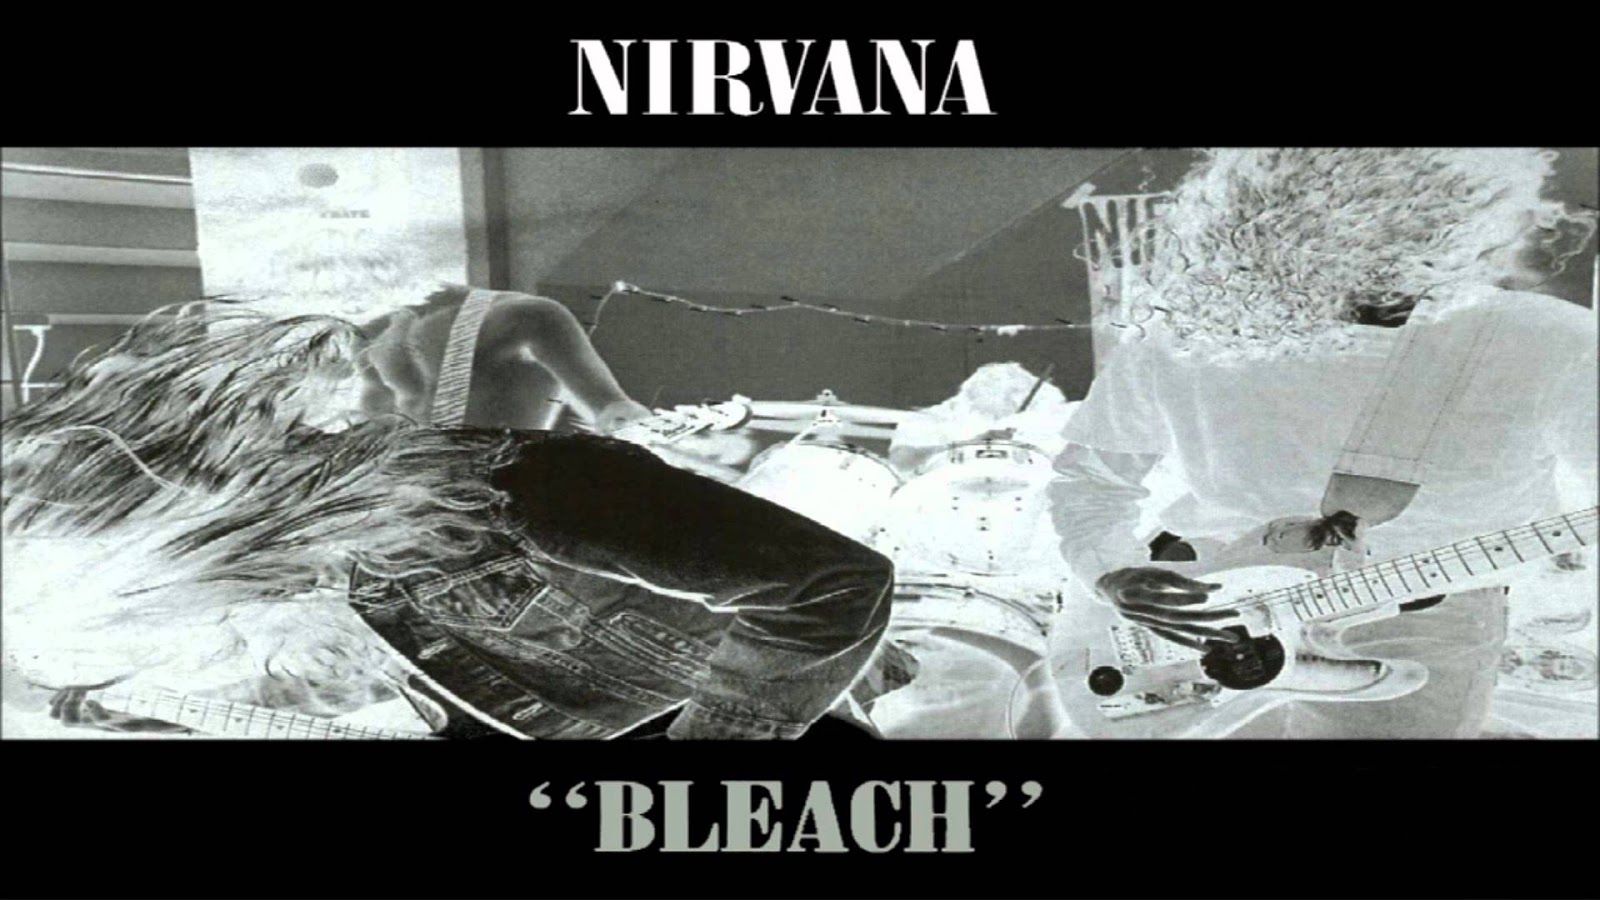 Nirvana guitar tutorial: Nirvana Bleach Full Guitar Tab PDF FREE DOWNLOAD!!!